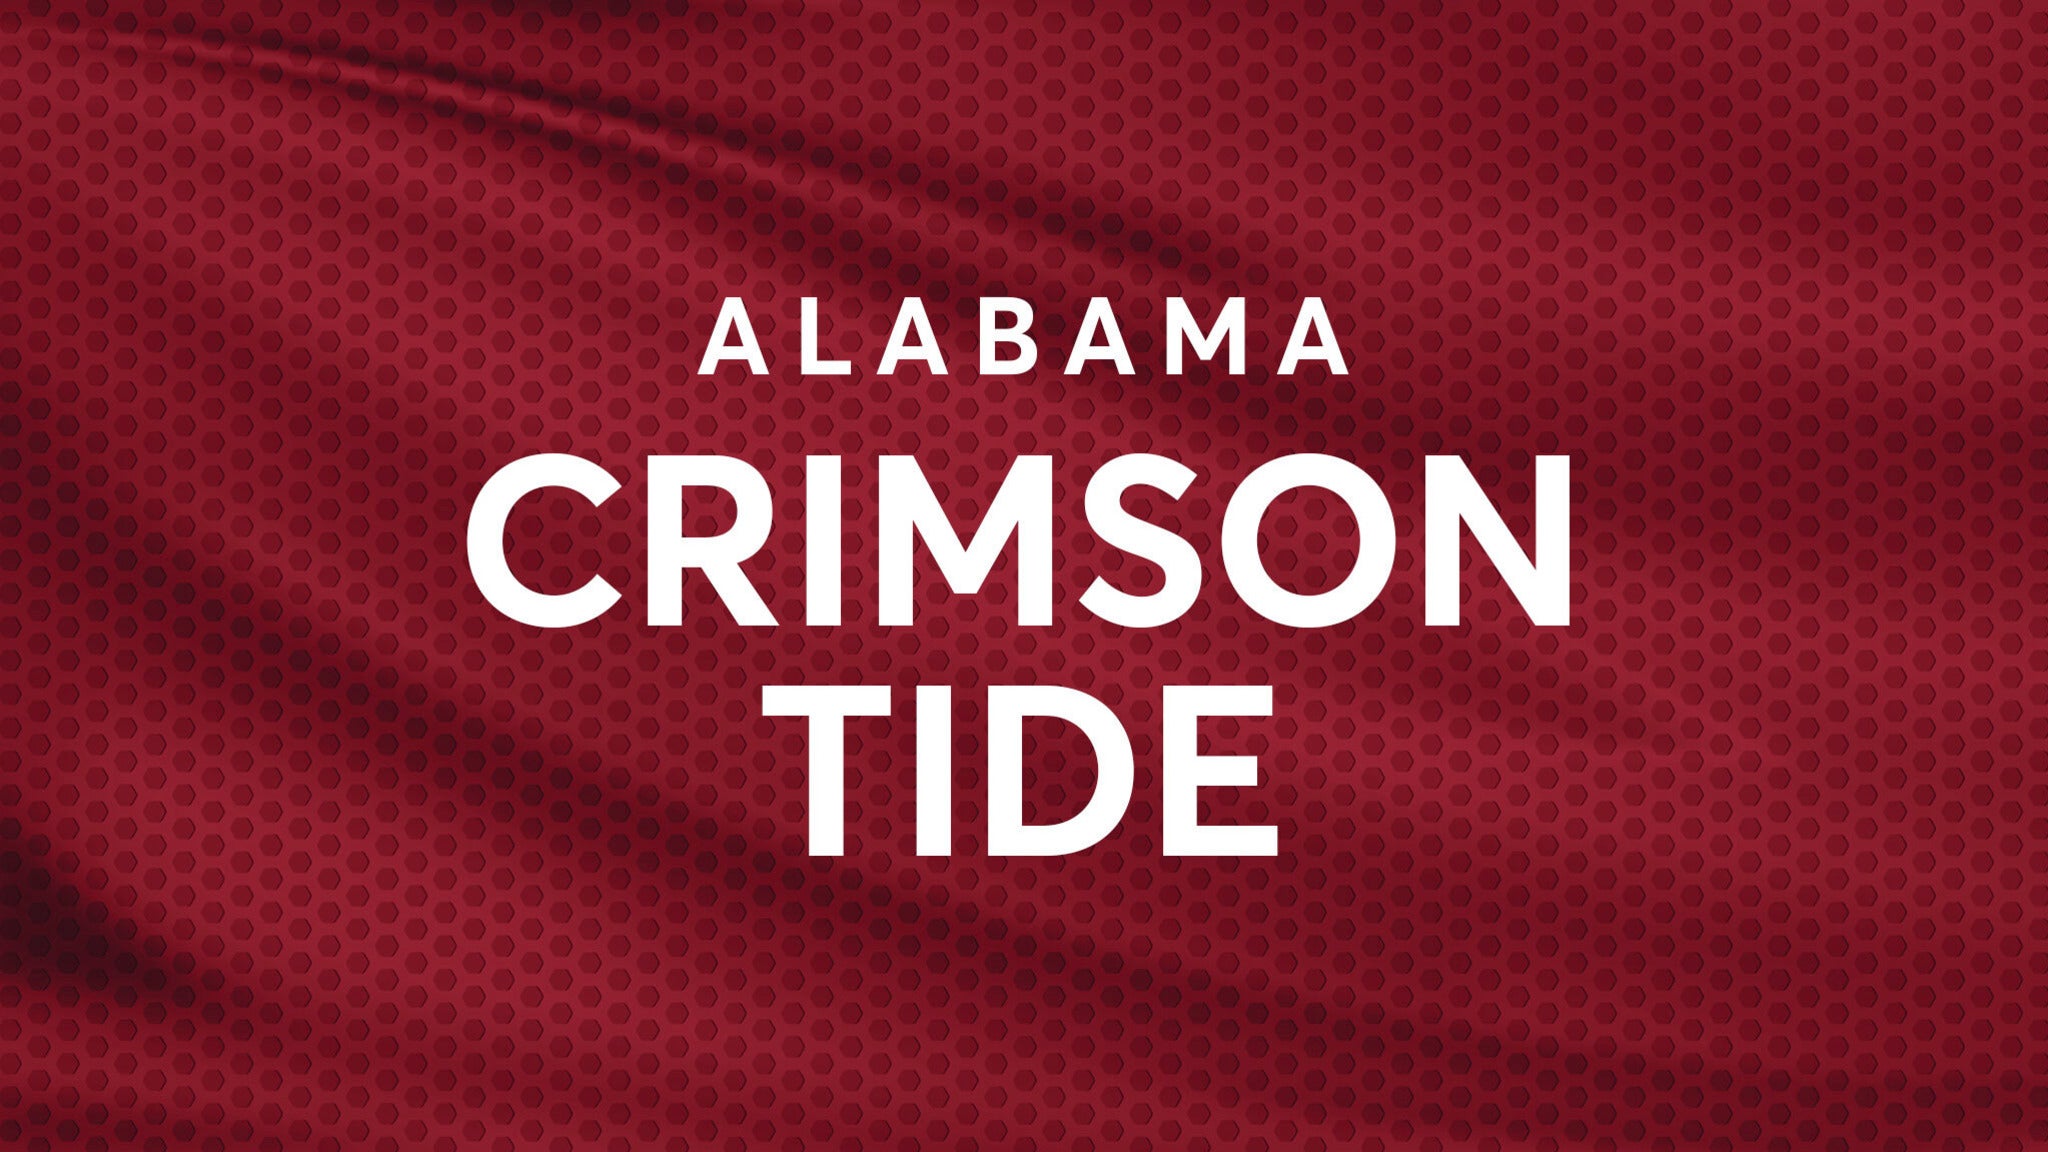 Alabama Crimson Tide Softball presale information on freepresalepasswords.com